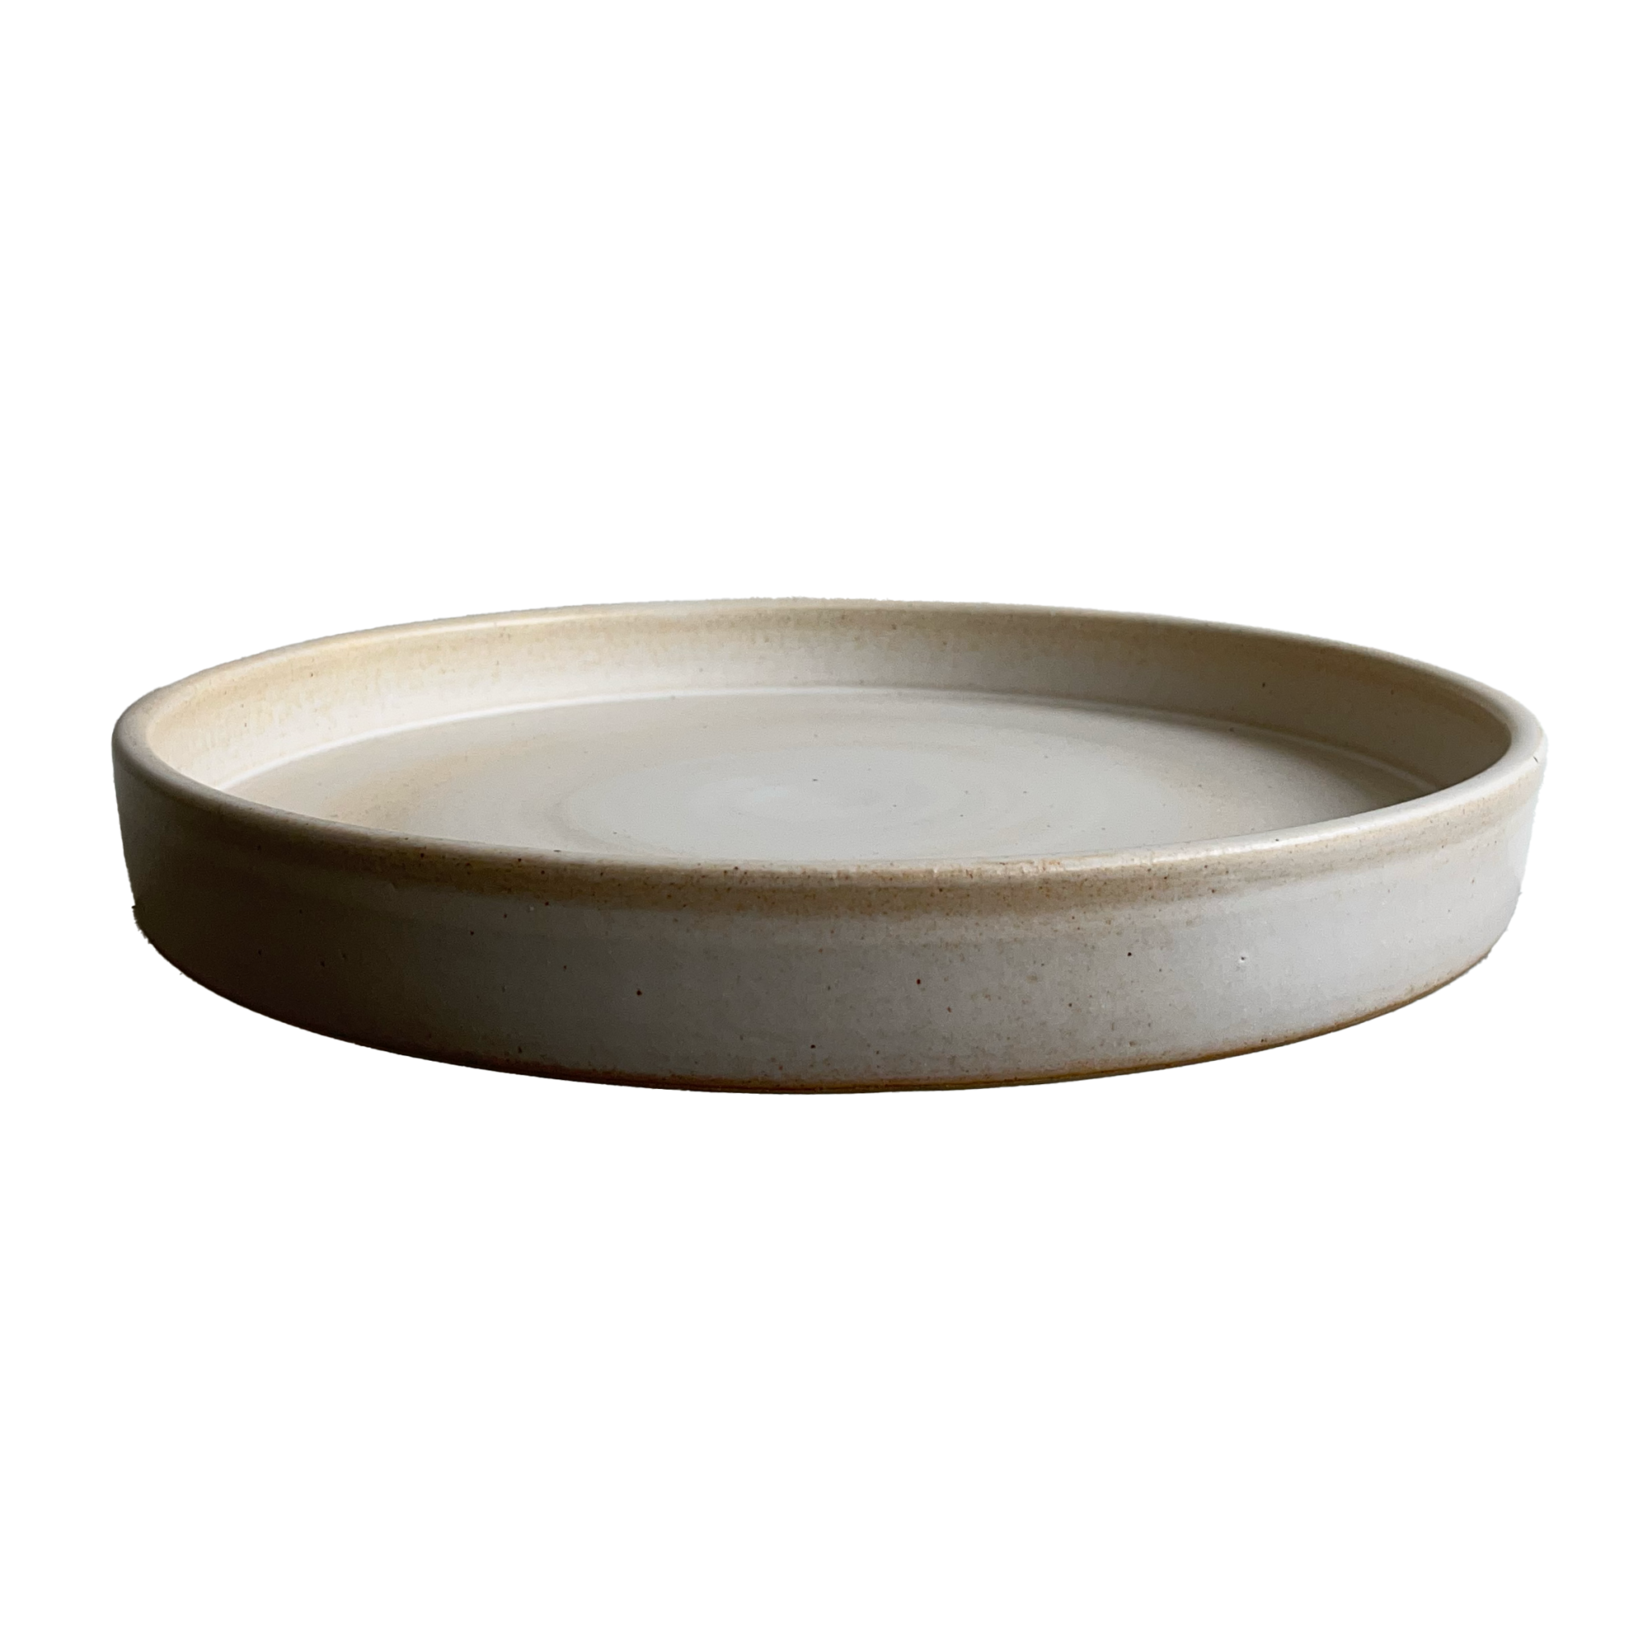 Sheldon Ceramics Sheldon - Coupe Tray - Medium - Eggshell